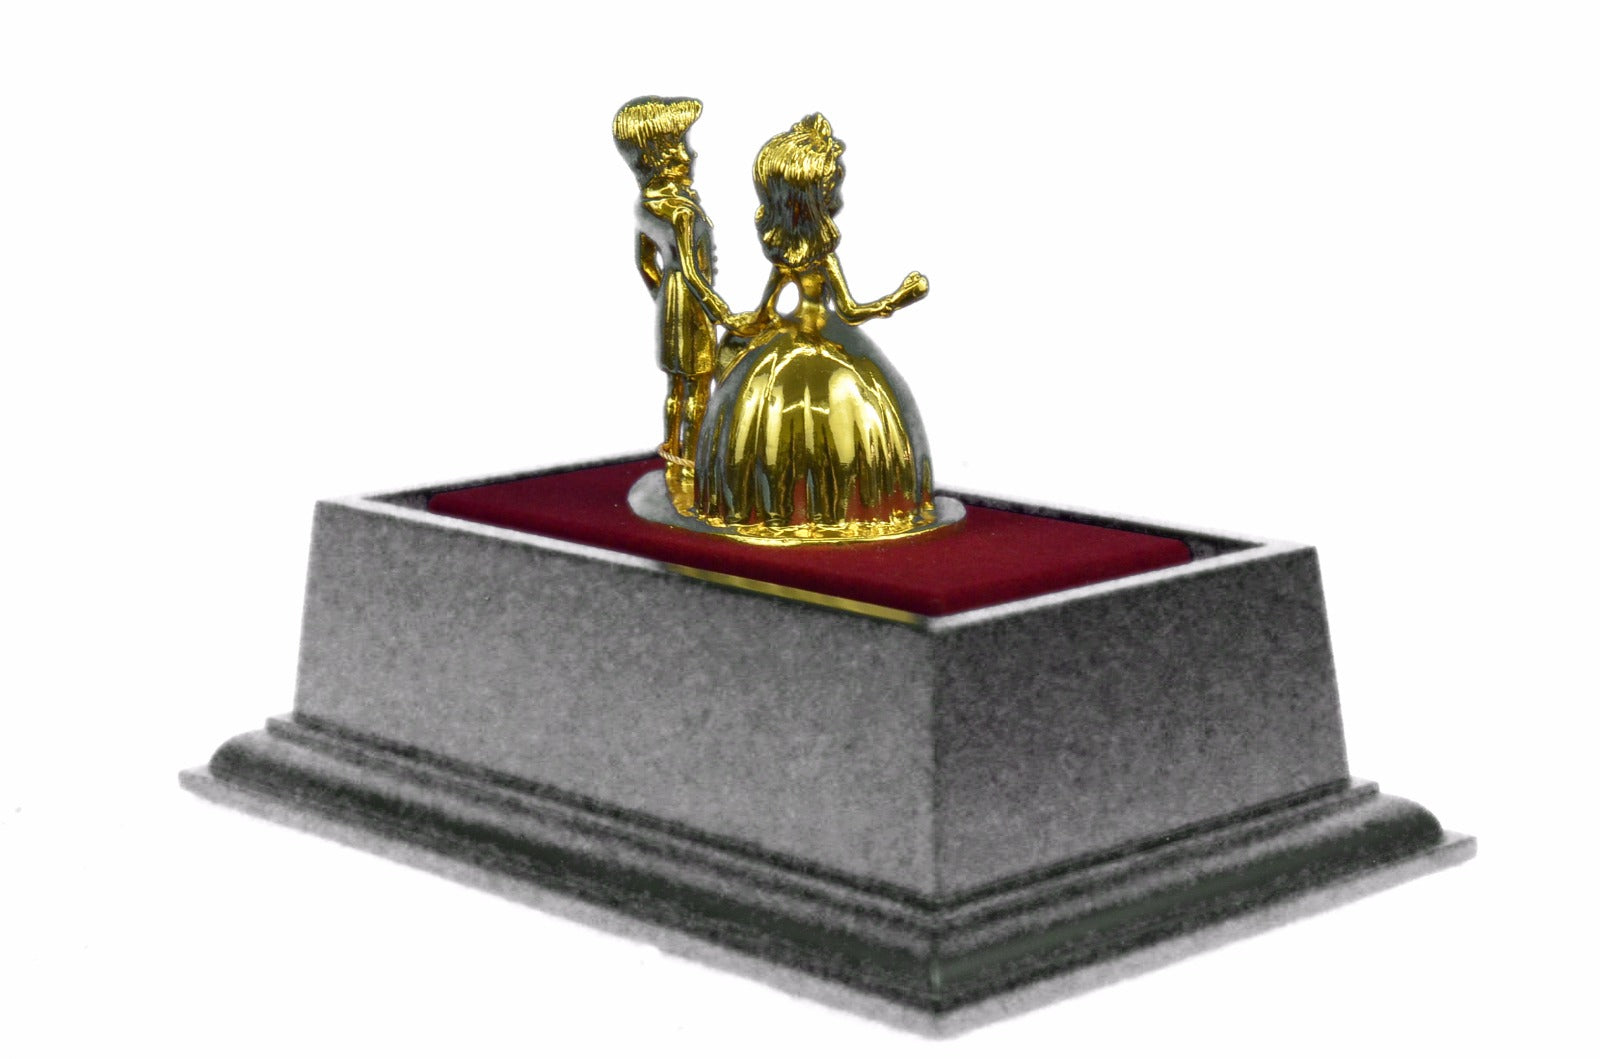 24K Gold Plated Mam Woman Marriage Hot Cast Bronze Sculpture Glass Display Decor